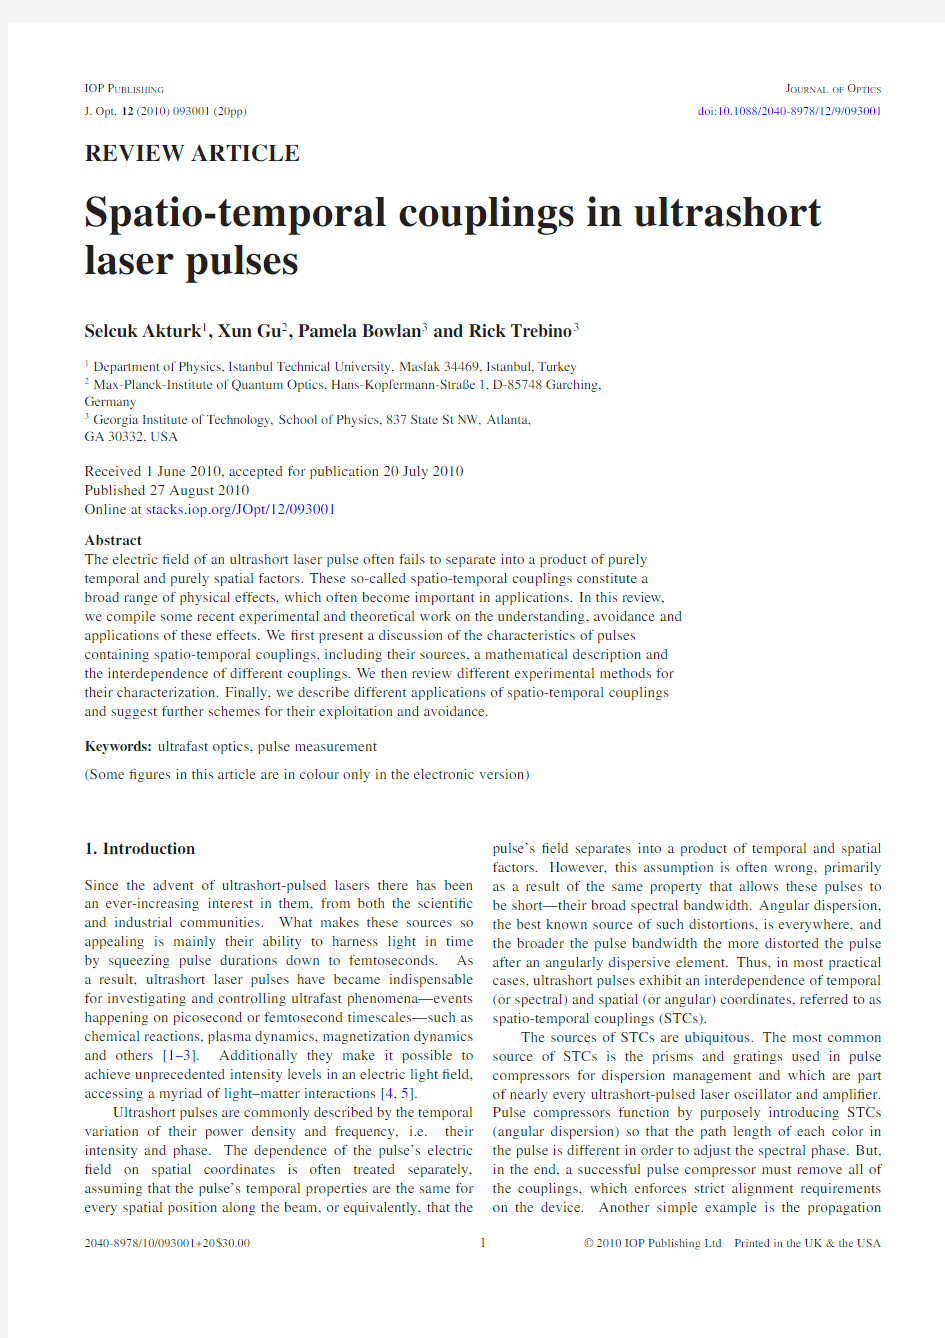 Spatio-temporal couplings in ultrashort laser pulses